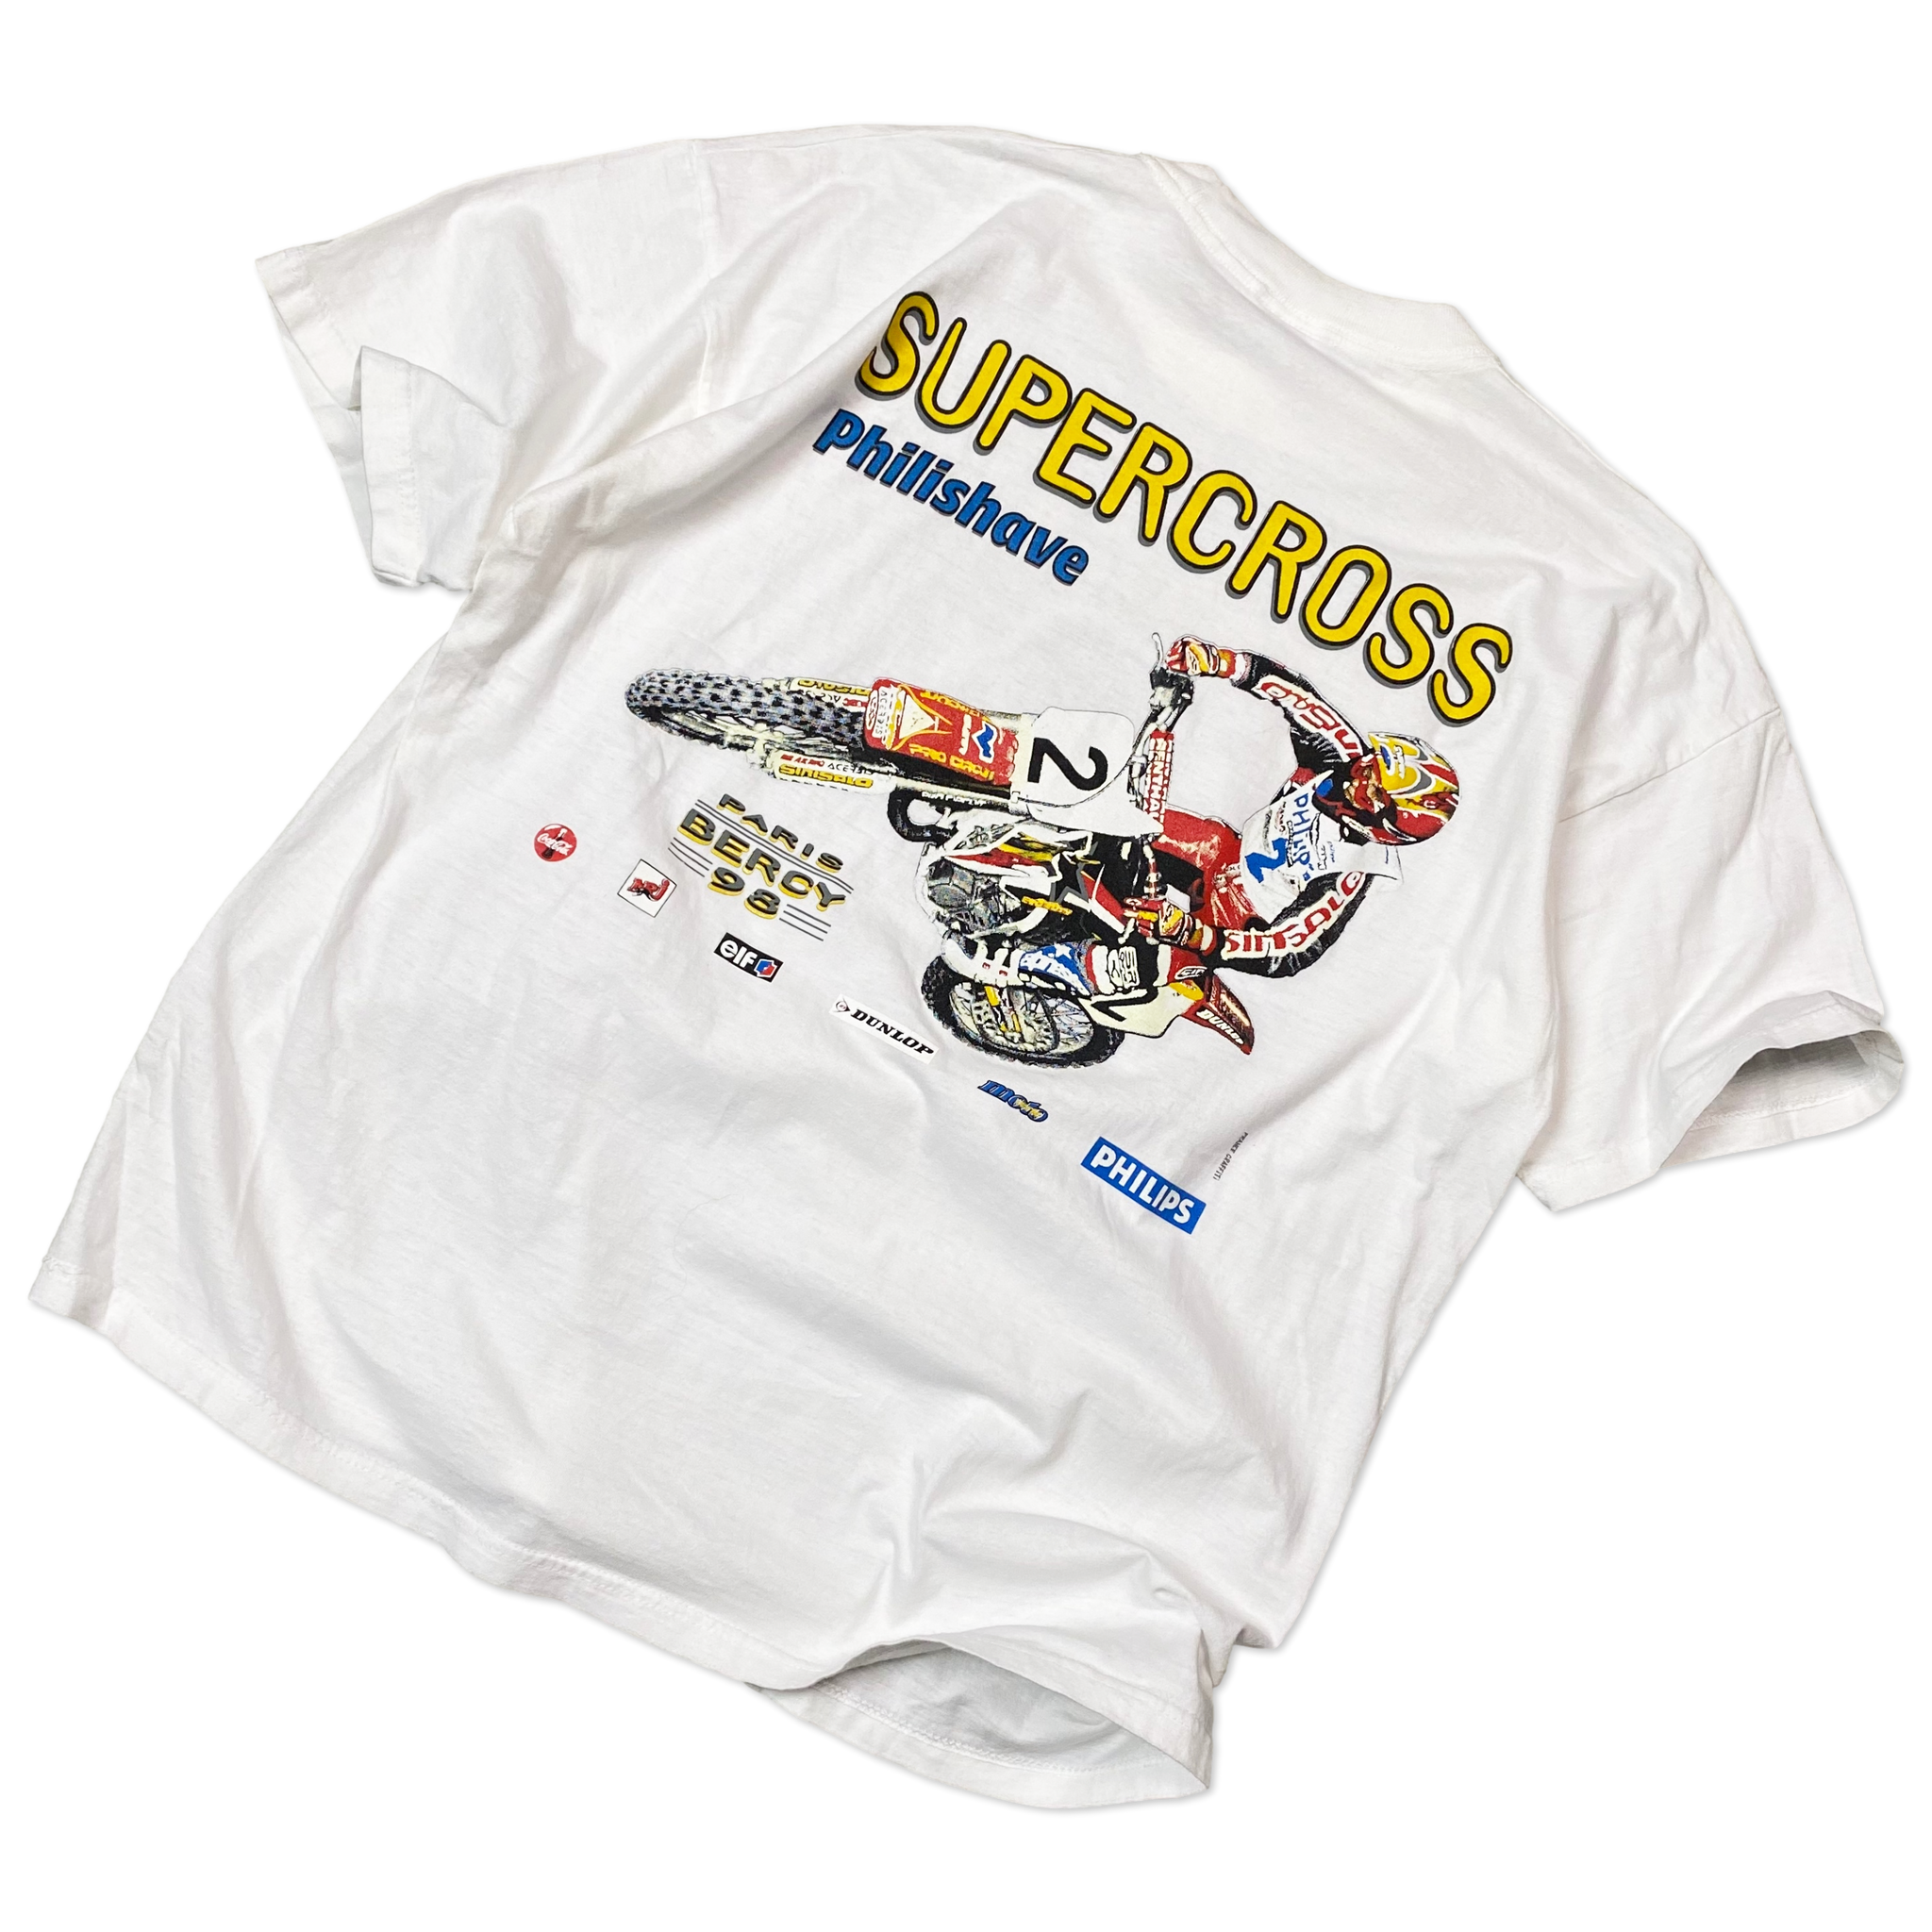 NOS 1998 Paris-Bercy Supercross T-Shirt - Large